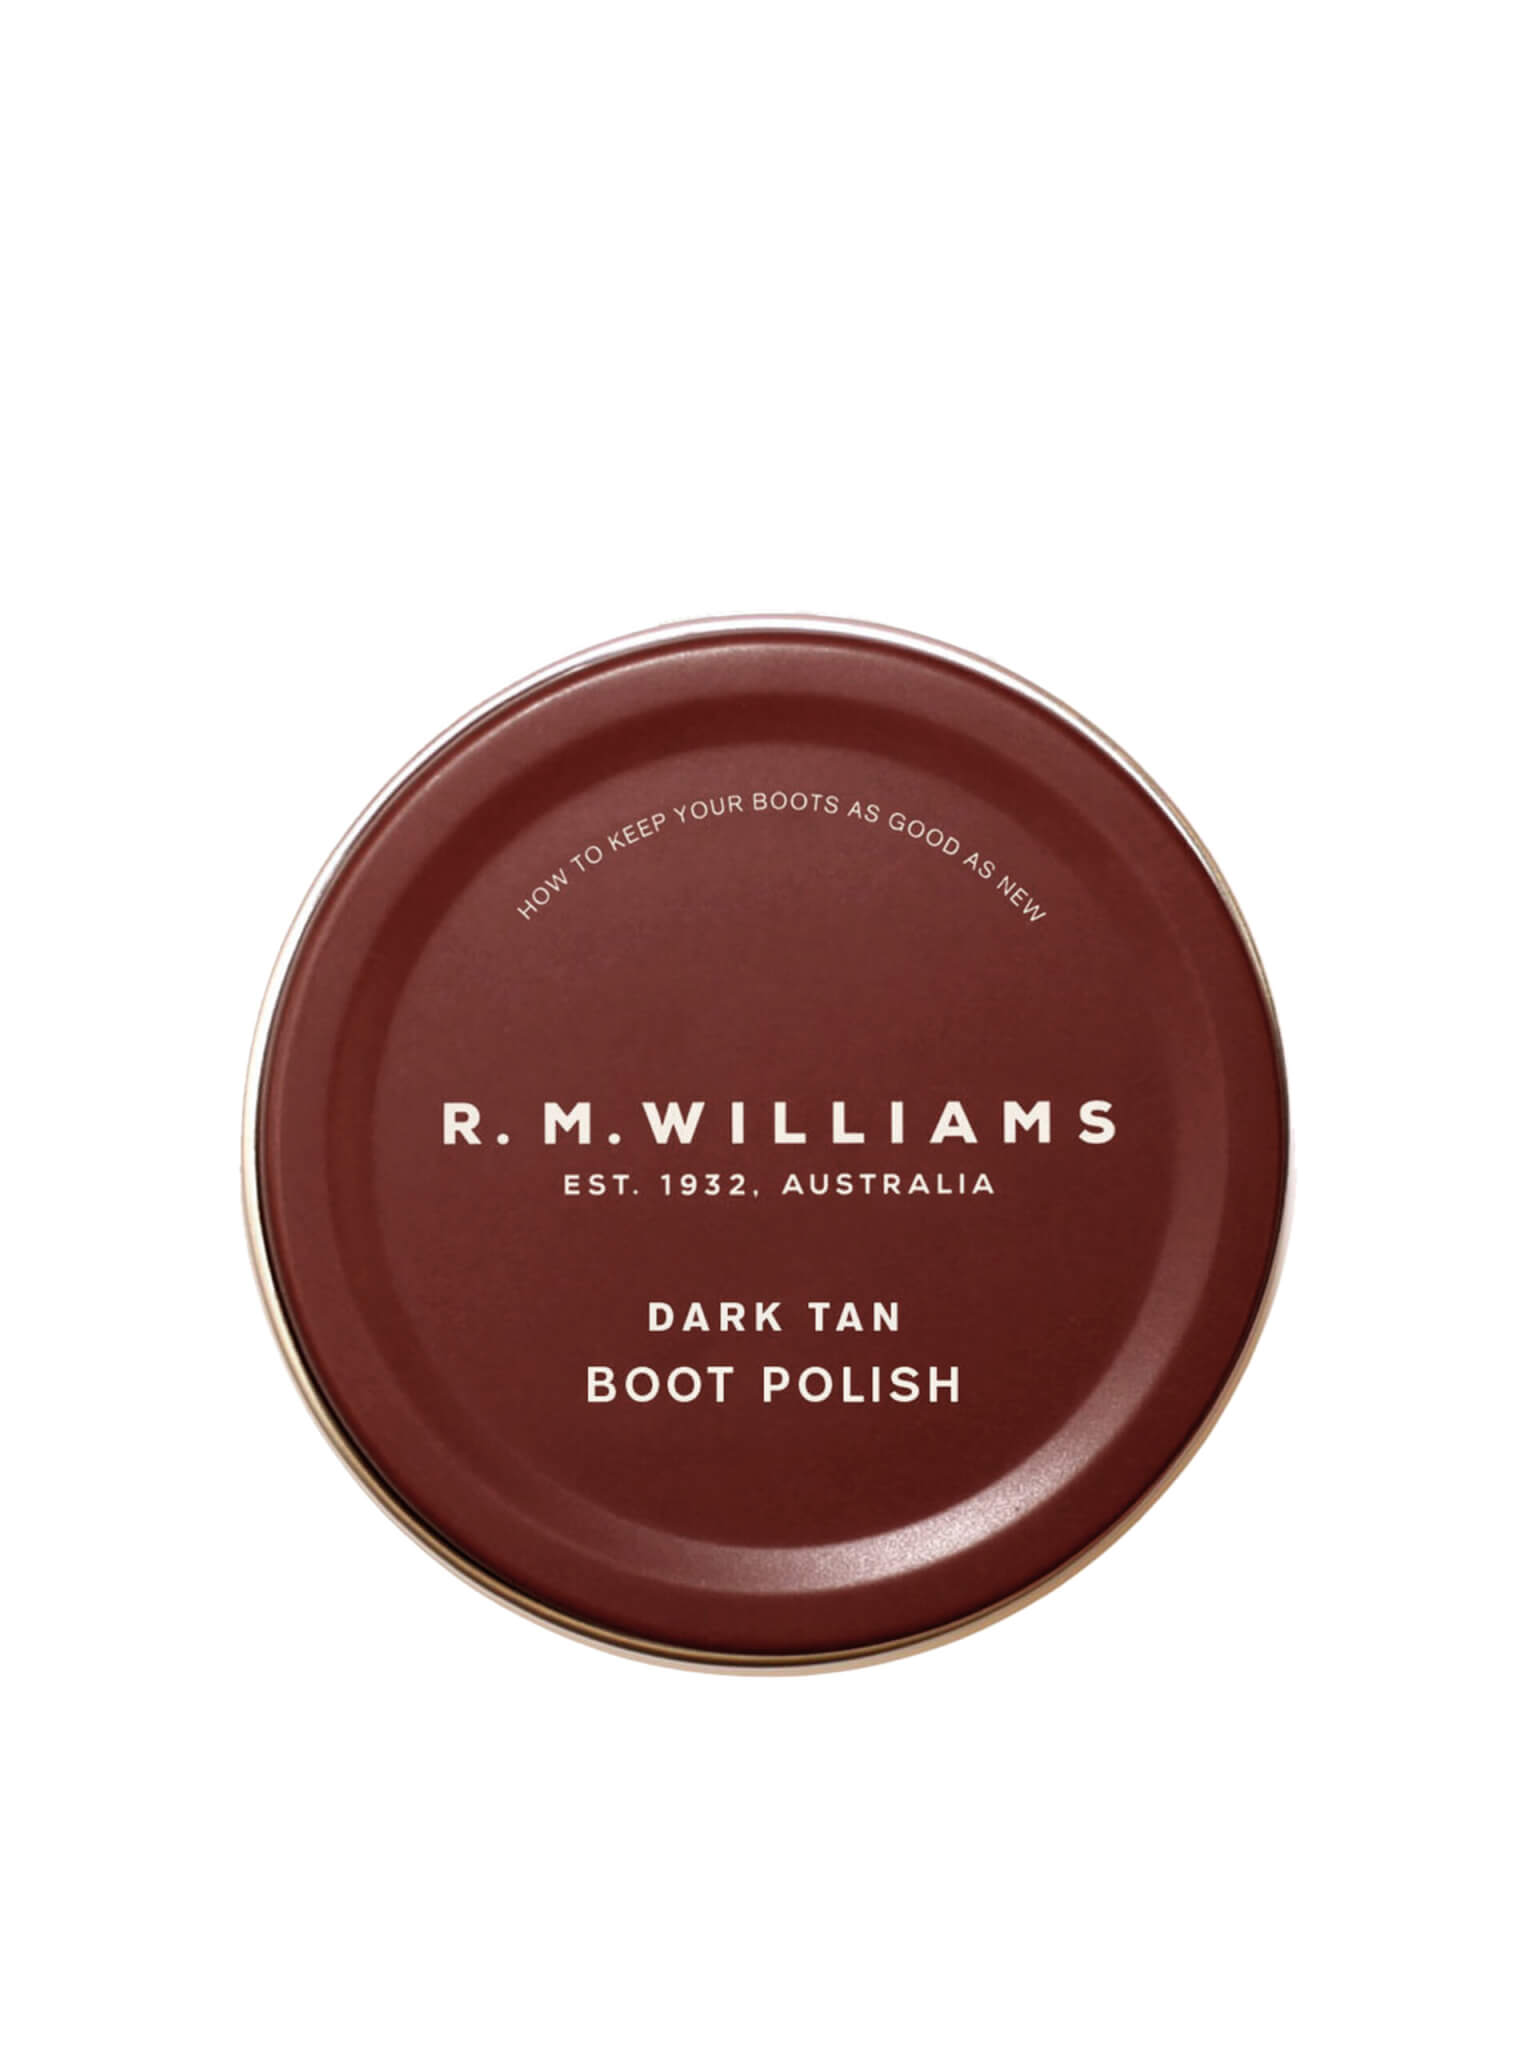 R M Williams Dark Tan boot polish